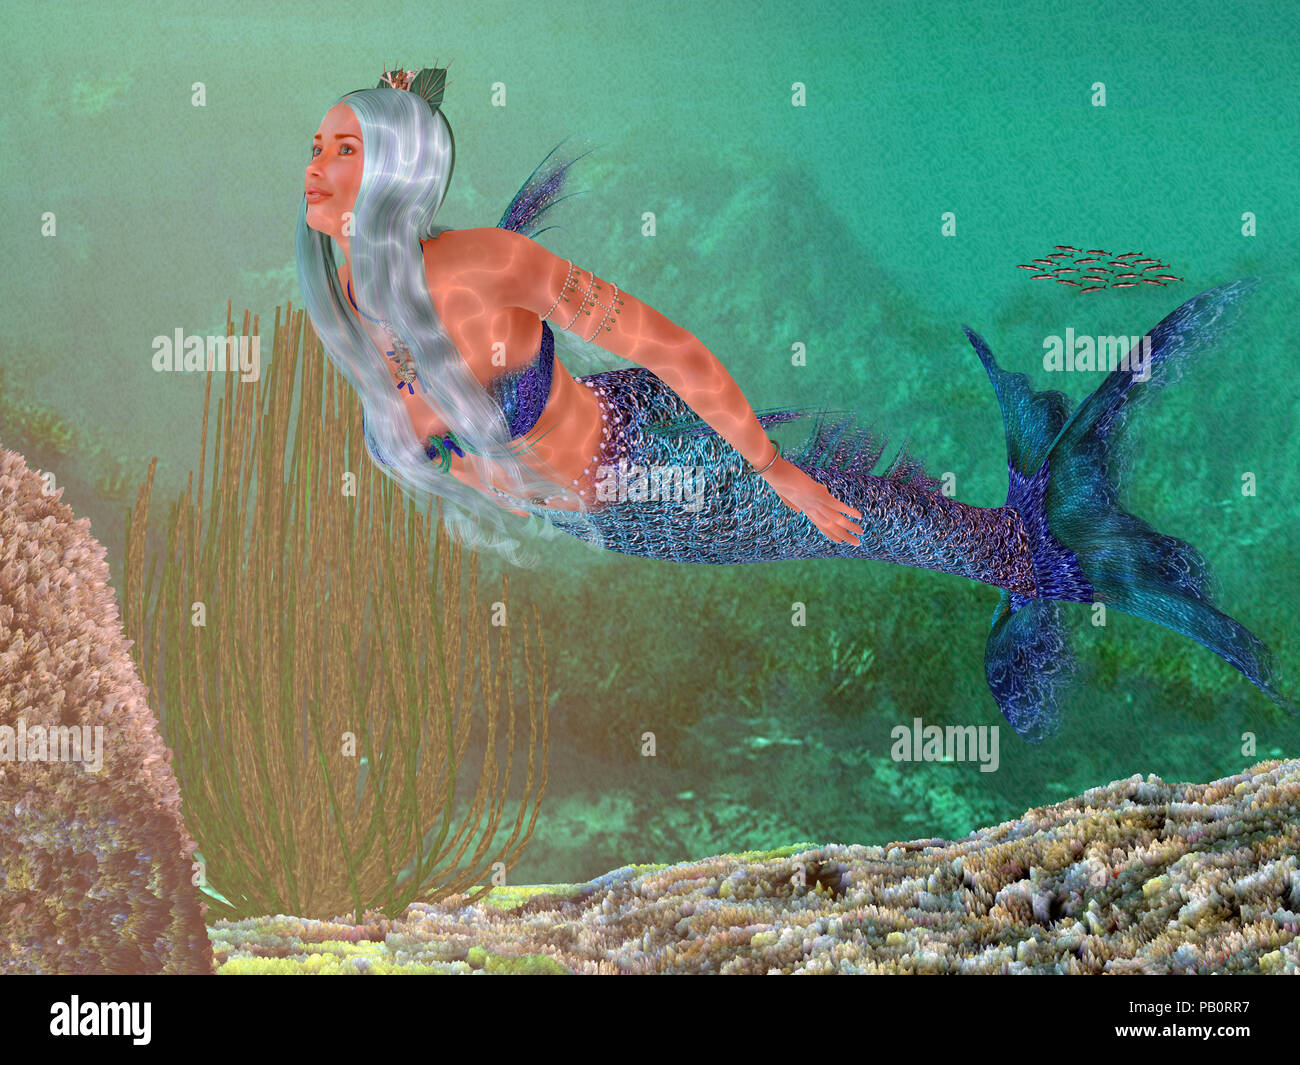 Marine Mermaid - A beautiful mermaid crowned with seashells swims gracefully underwater through a marine reef. Stock Photo